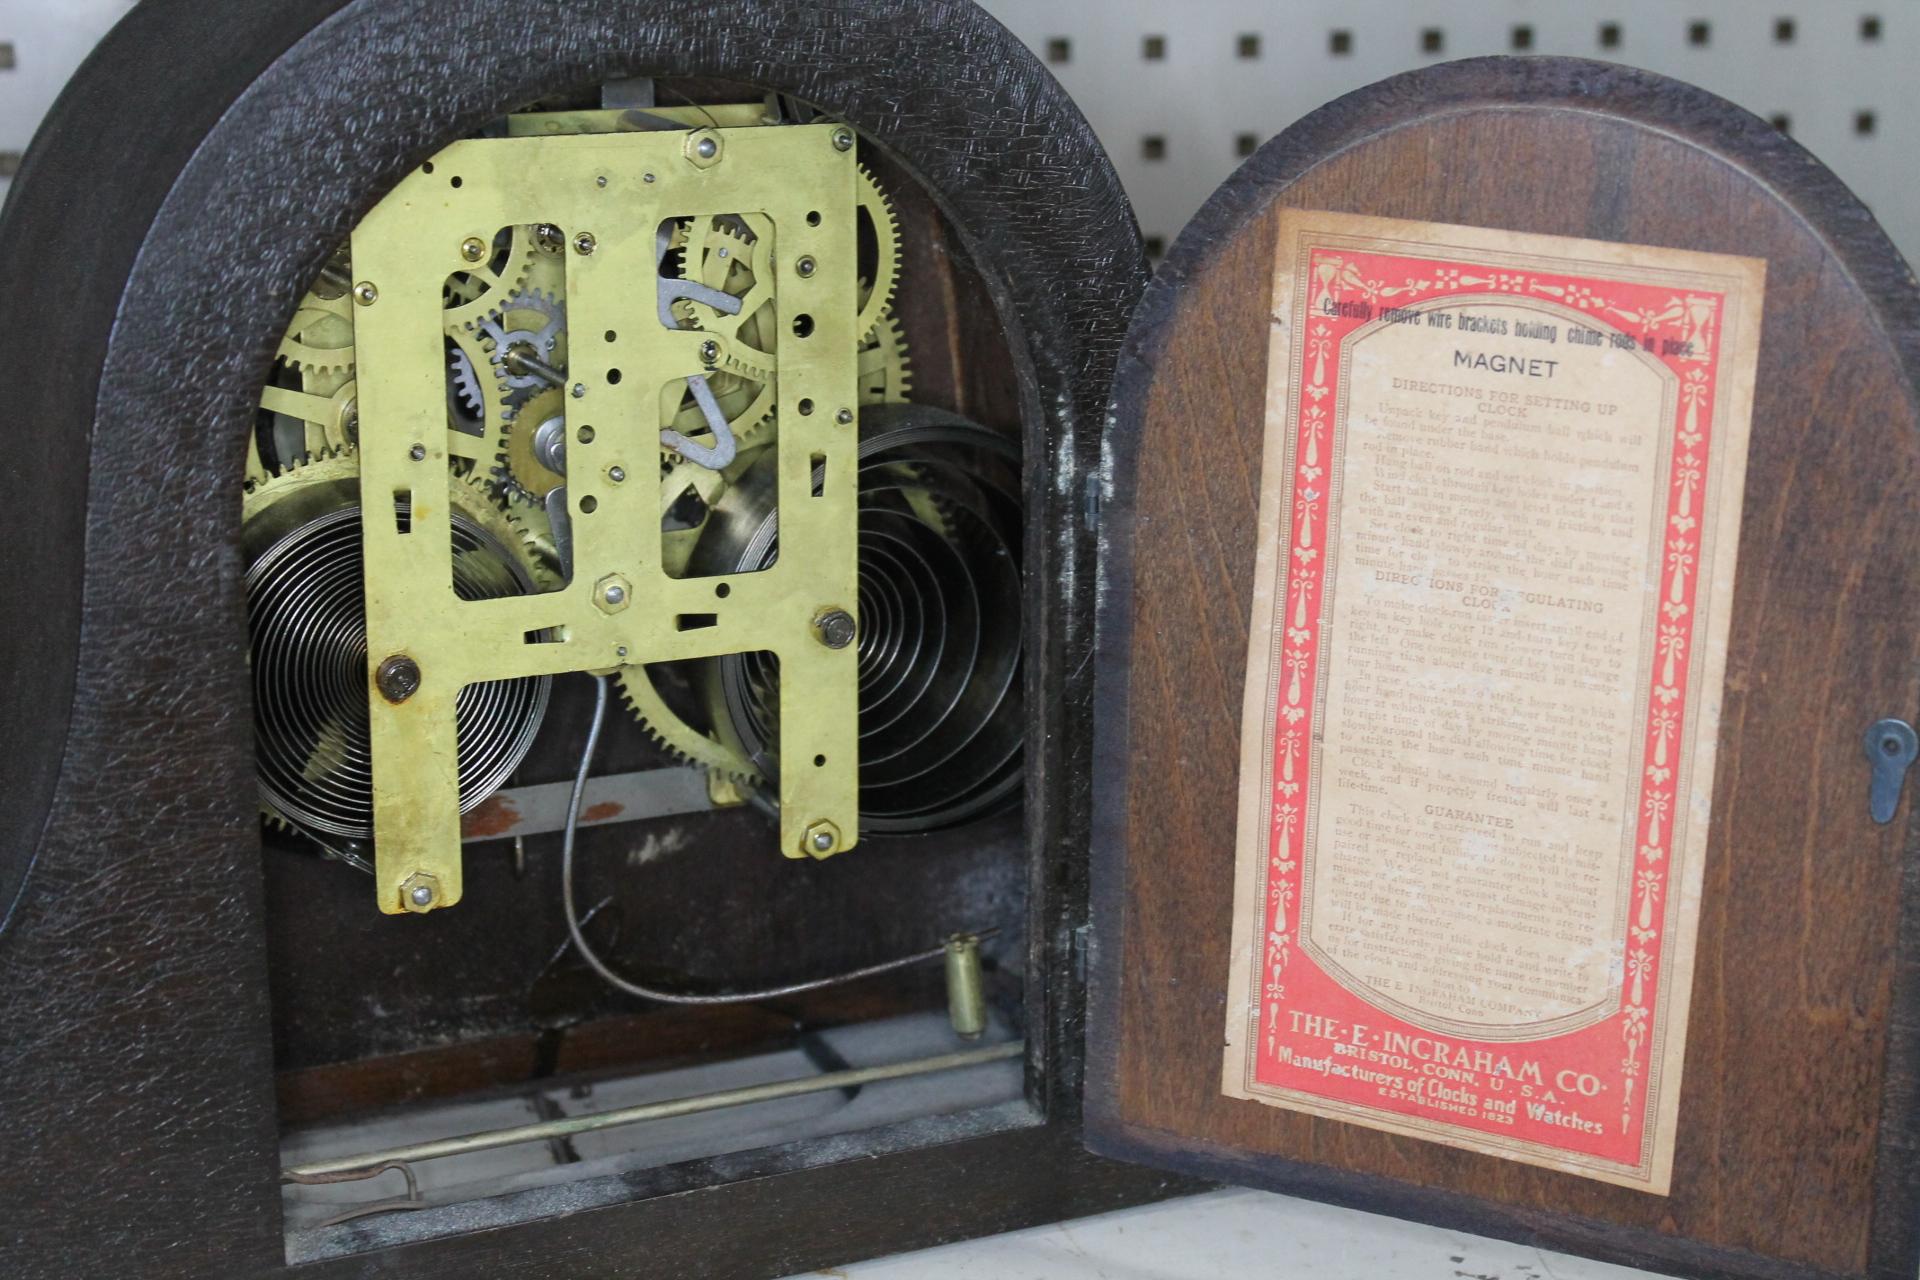 (2) Vintage Mantle Clocks